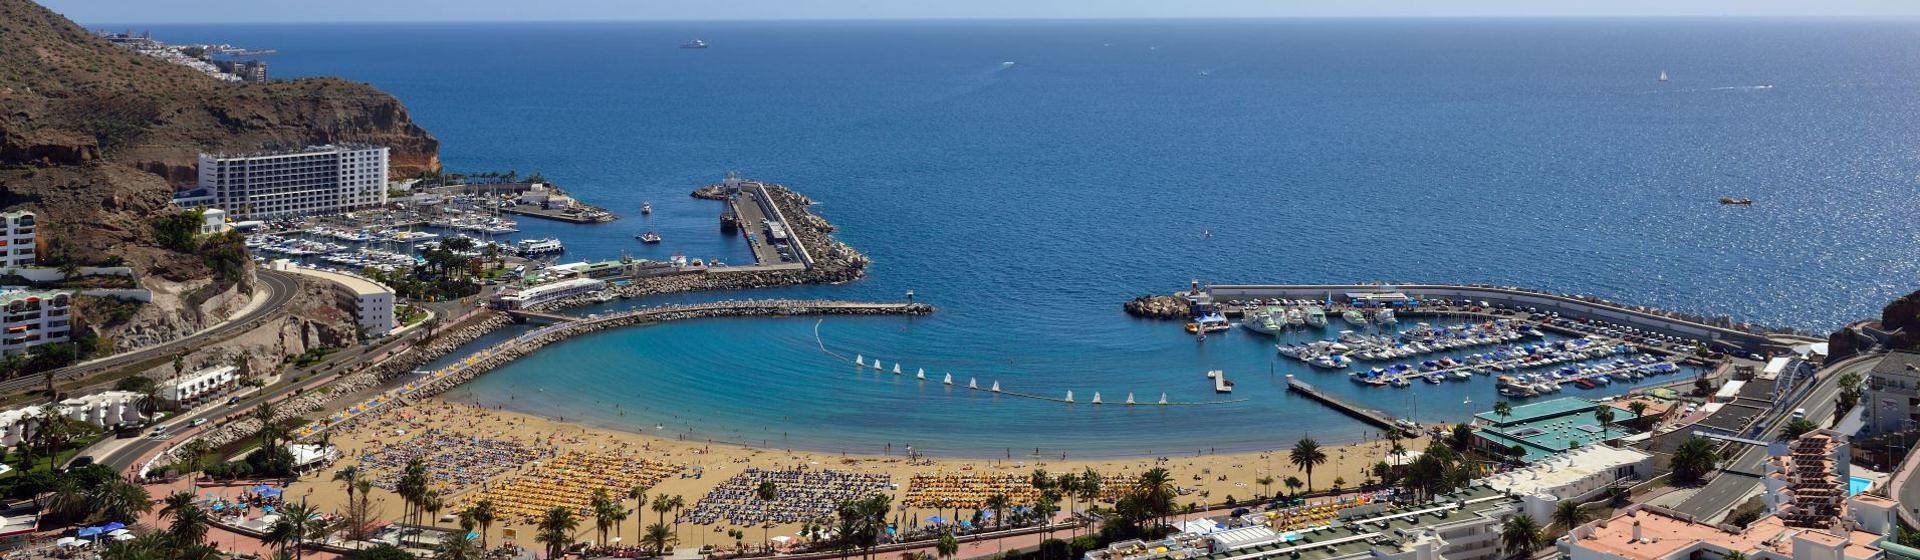 Holidays to Puerto Rico Gran Canaria Image